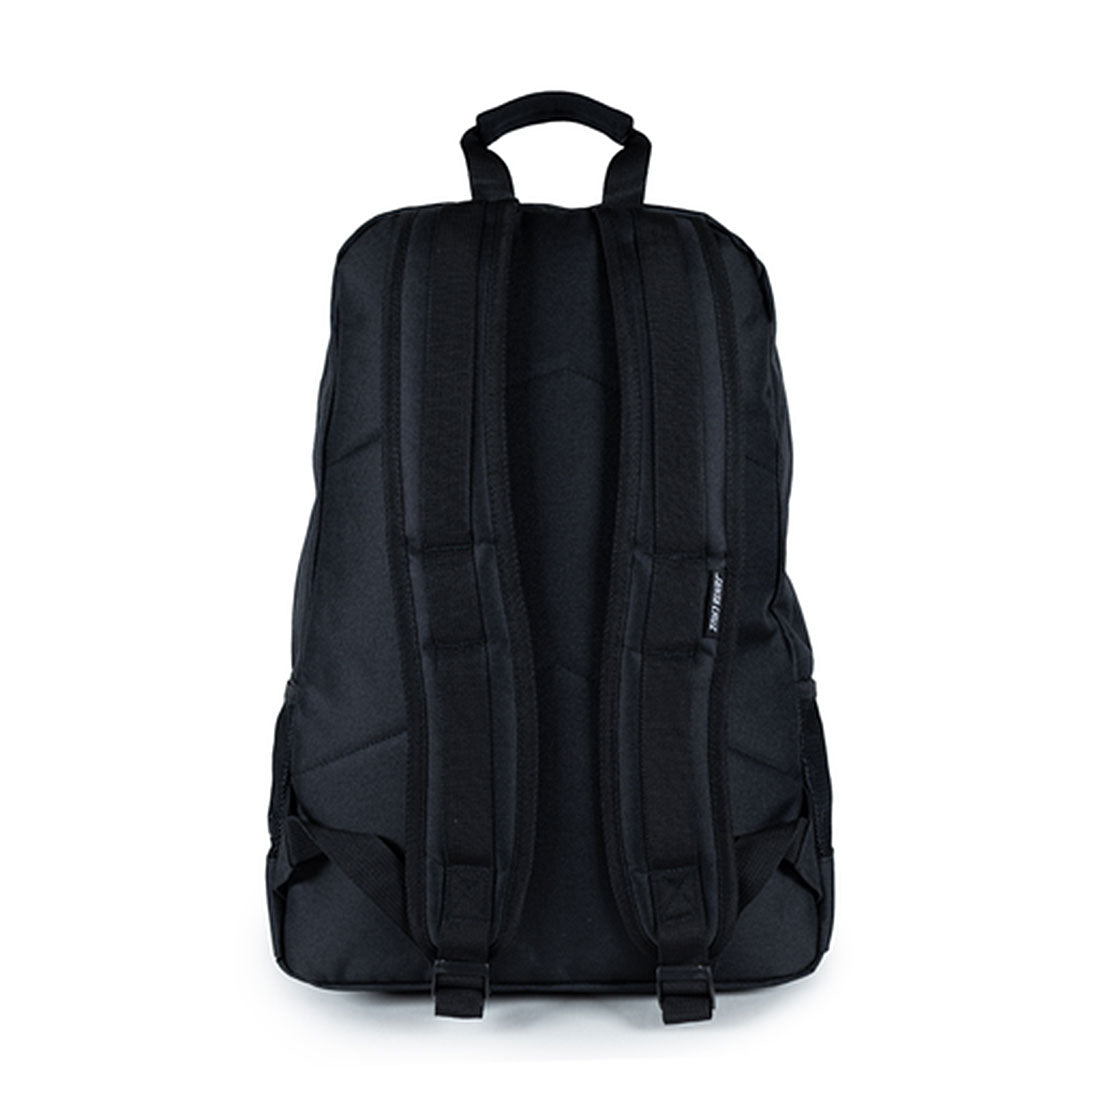 Santa Cruz MFG Retro Dot Backpack - Black Bags and Backpacks